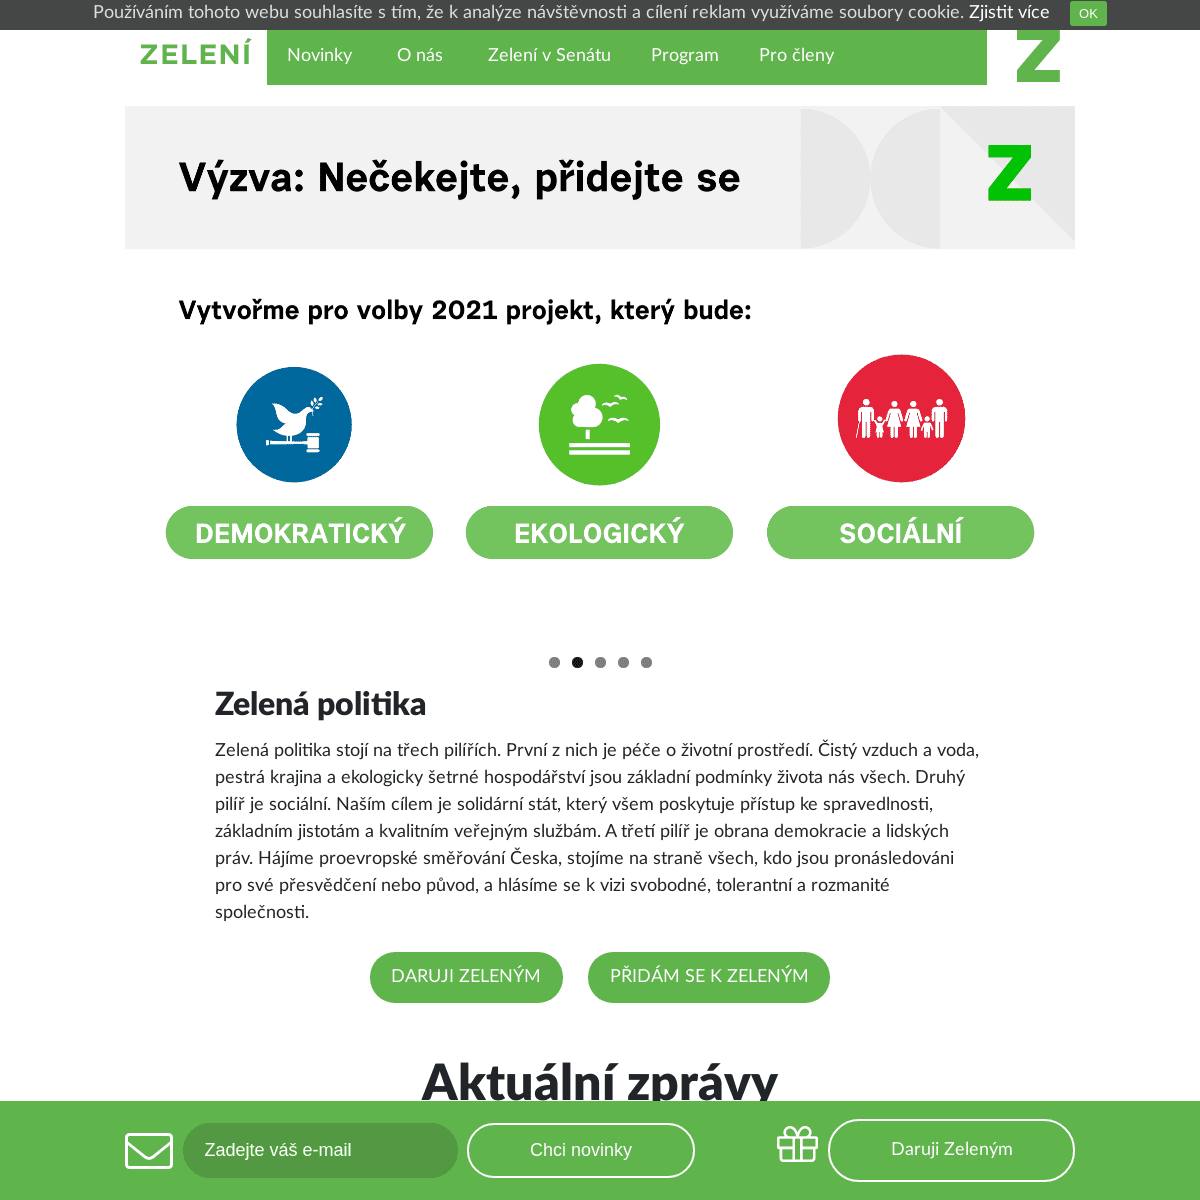 A complete backup of https://zeleni.cz